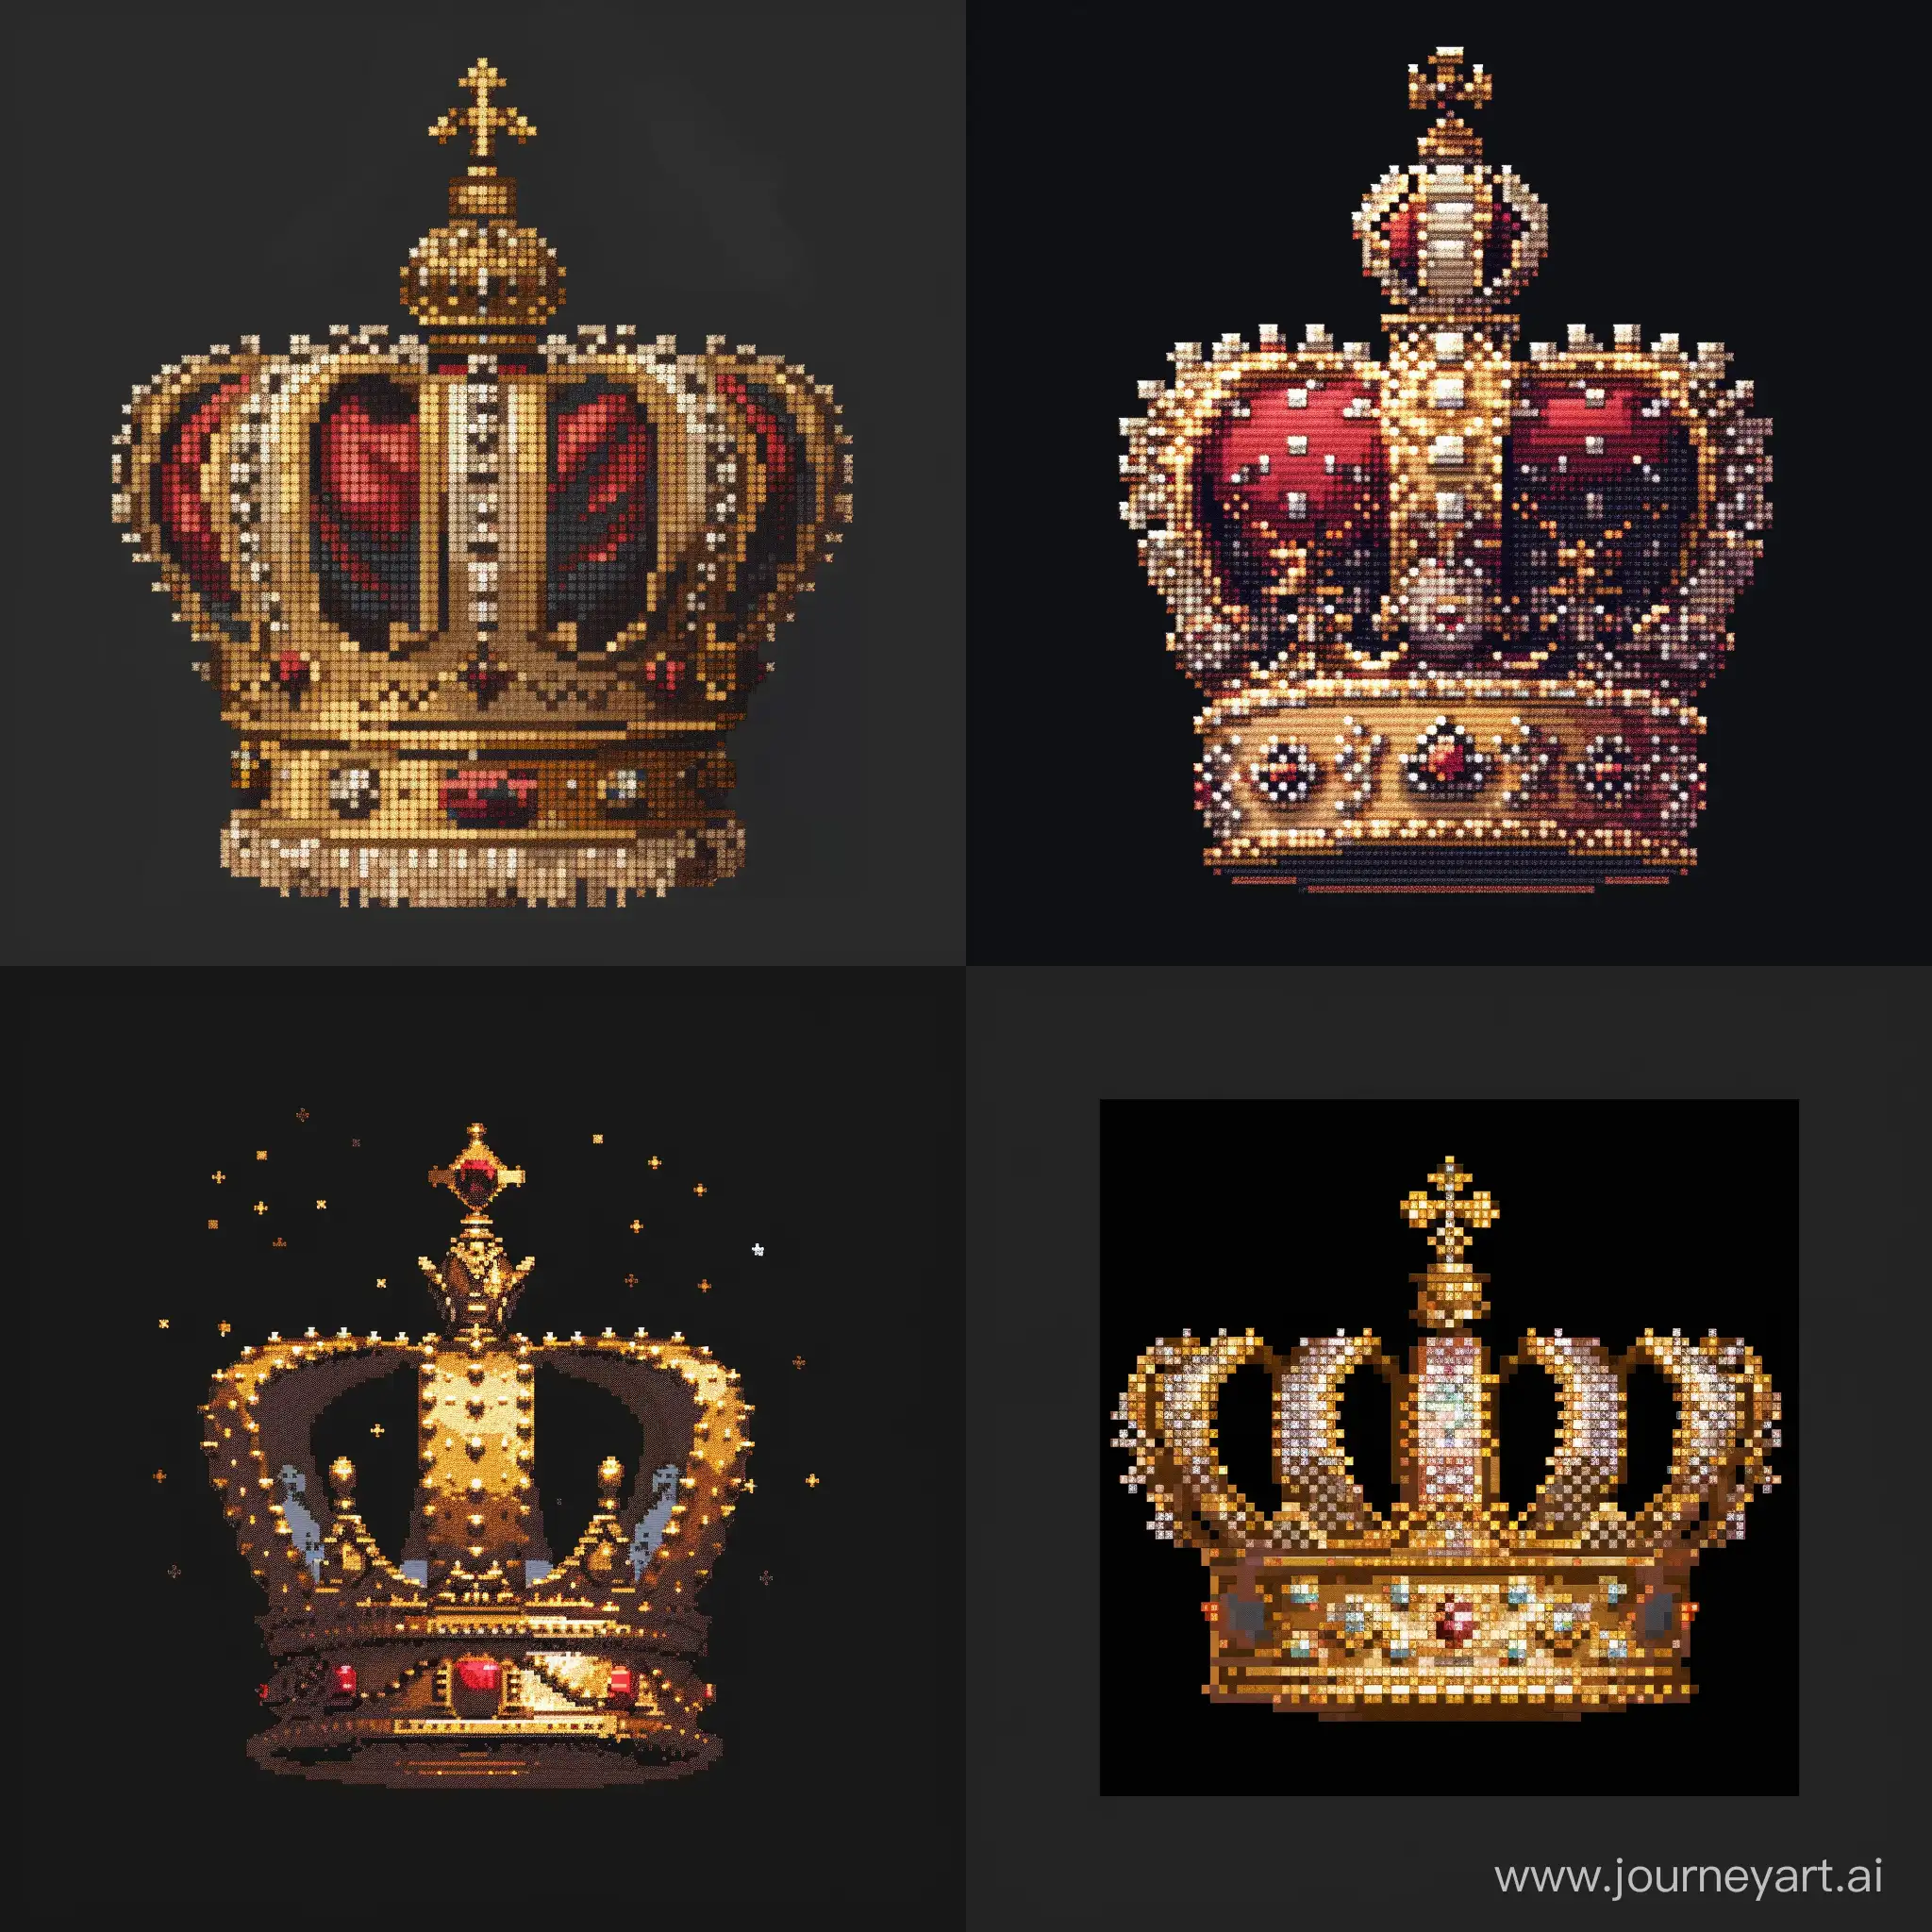 Black-Background-Crown-Pixel-Art-Royal-Emblem-32x32